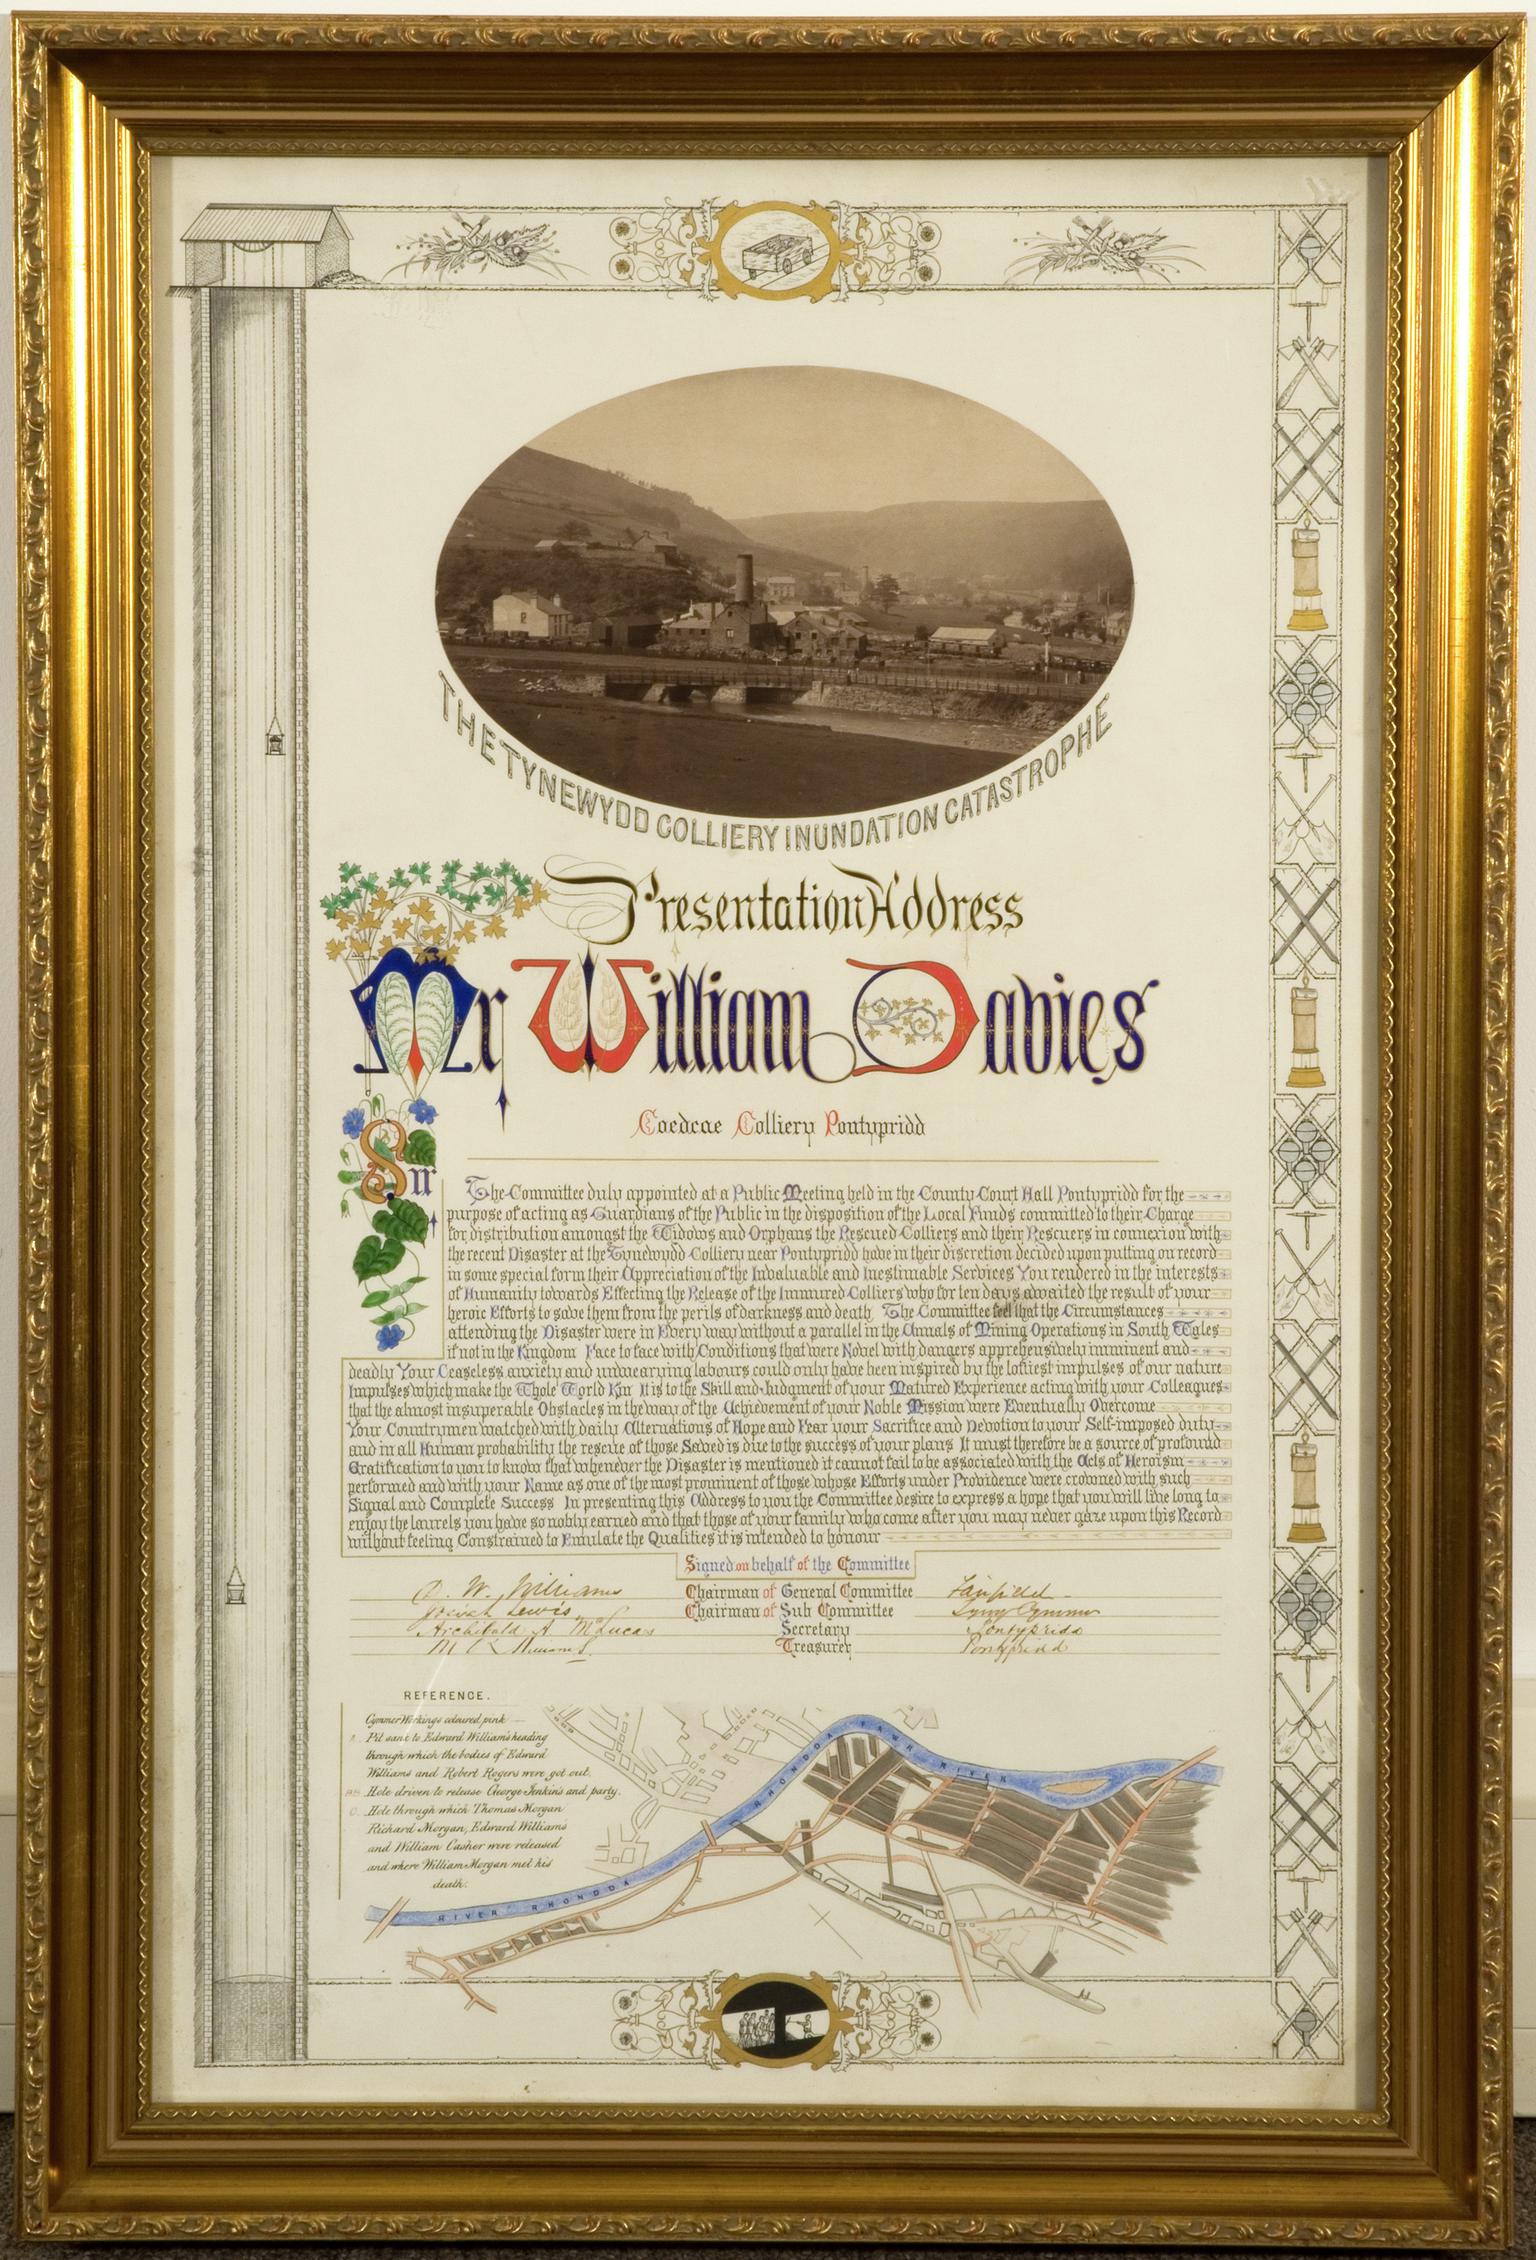 Illuminated address to William Davies, Coedcae Colliery